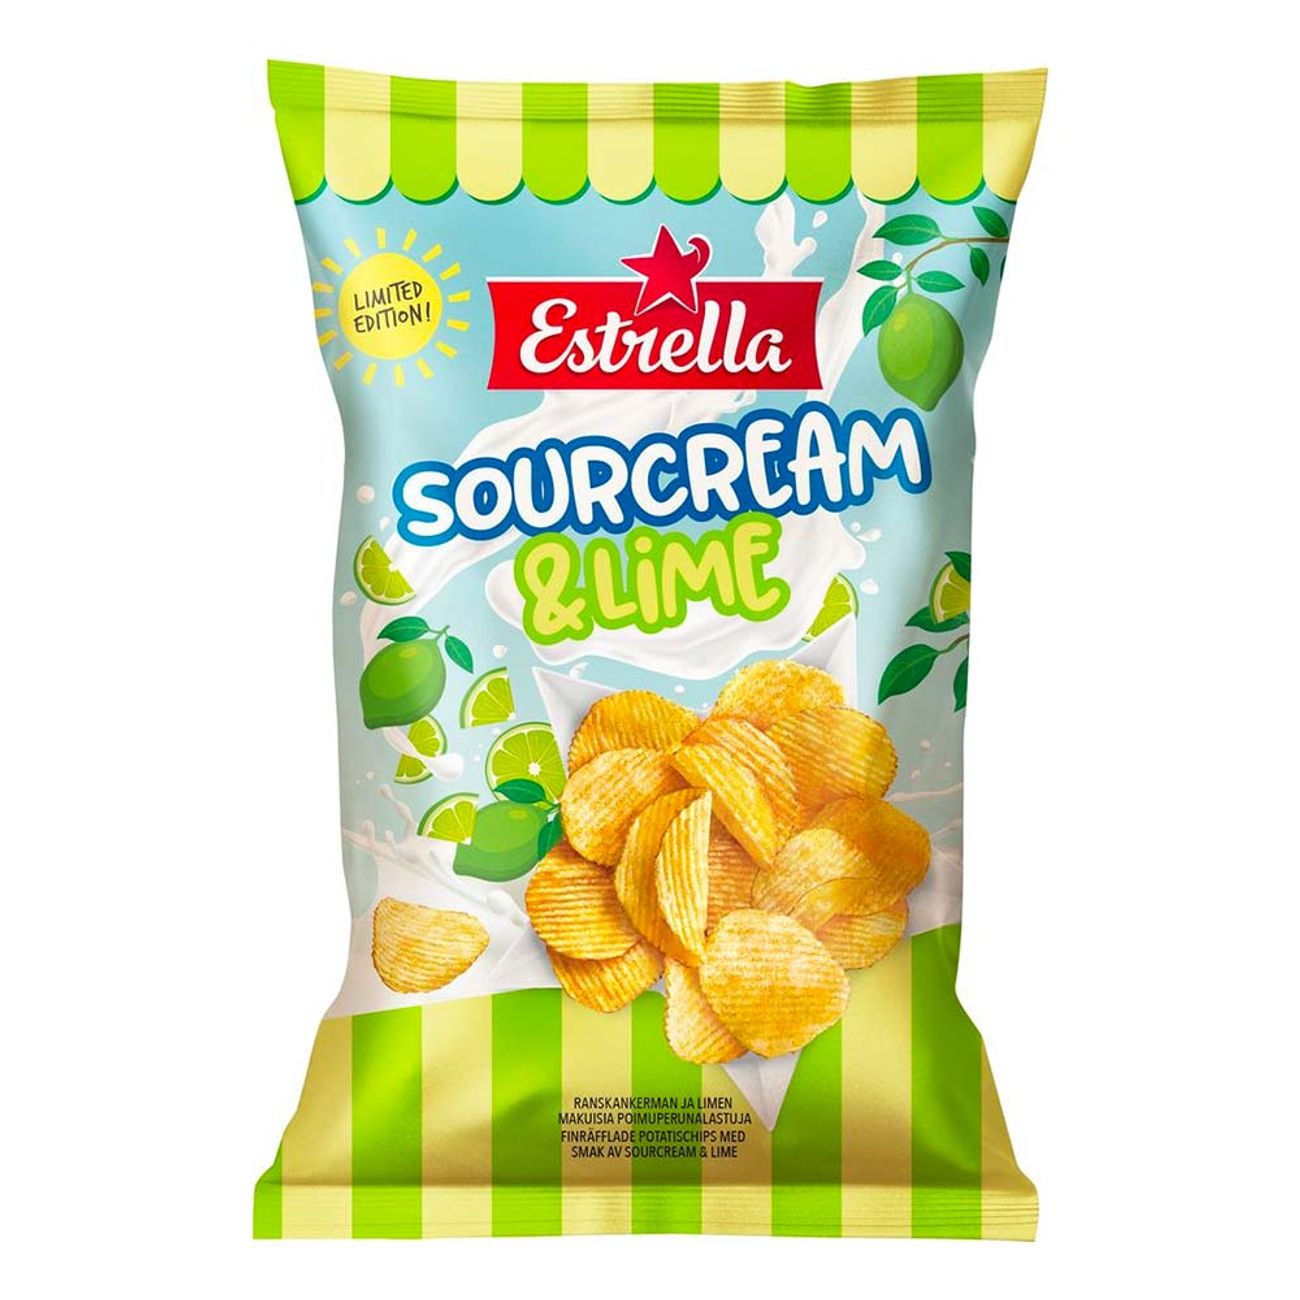 estrella-sourcream-lime-limited-edition-94886-1